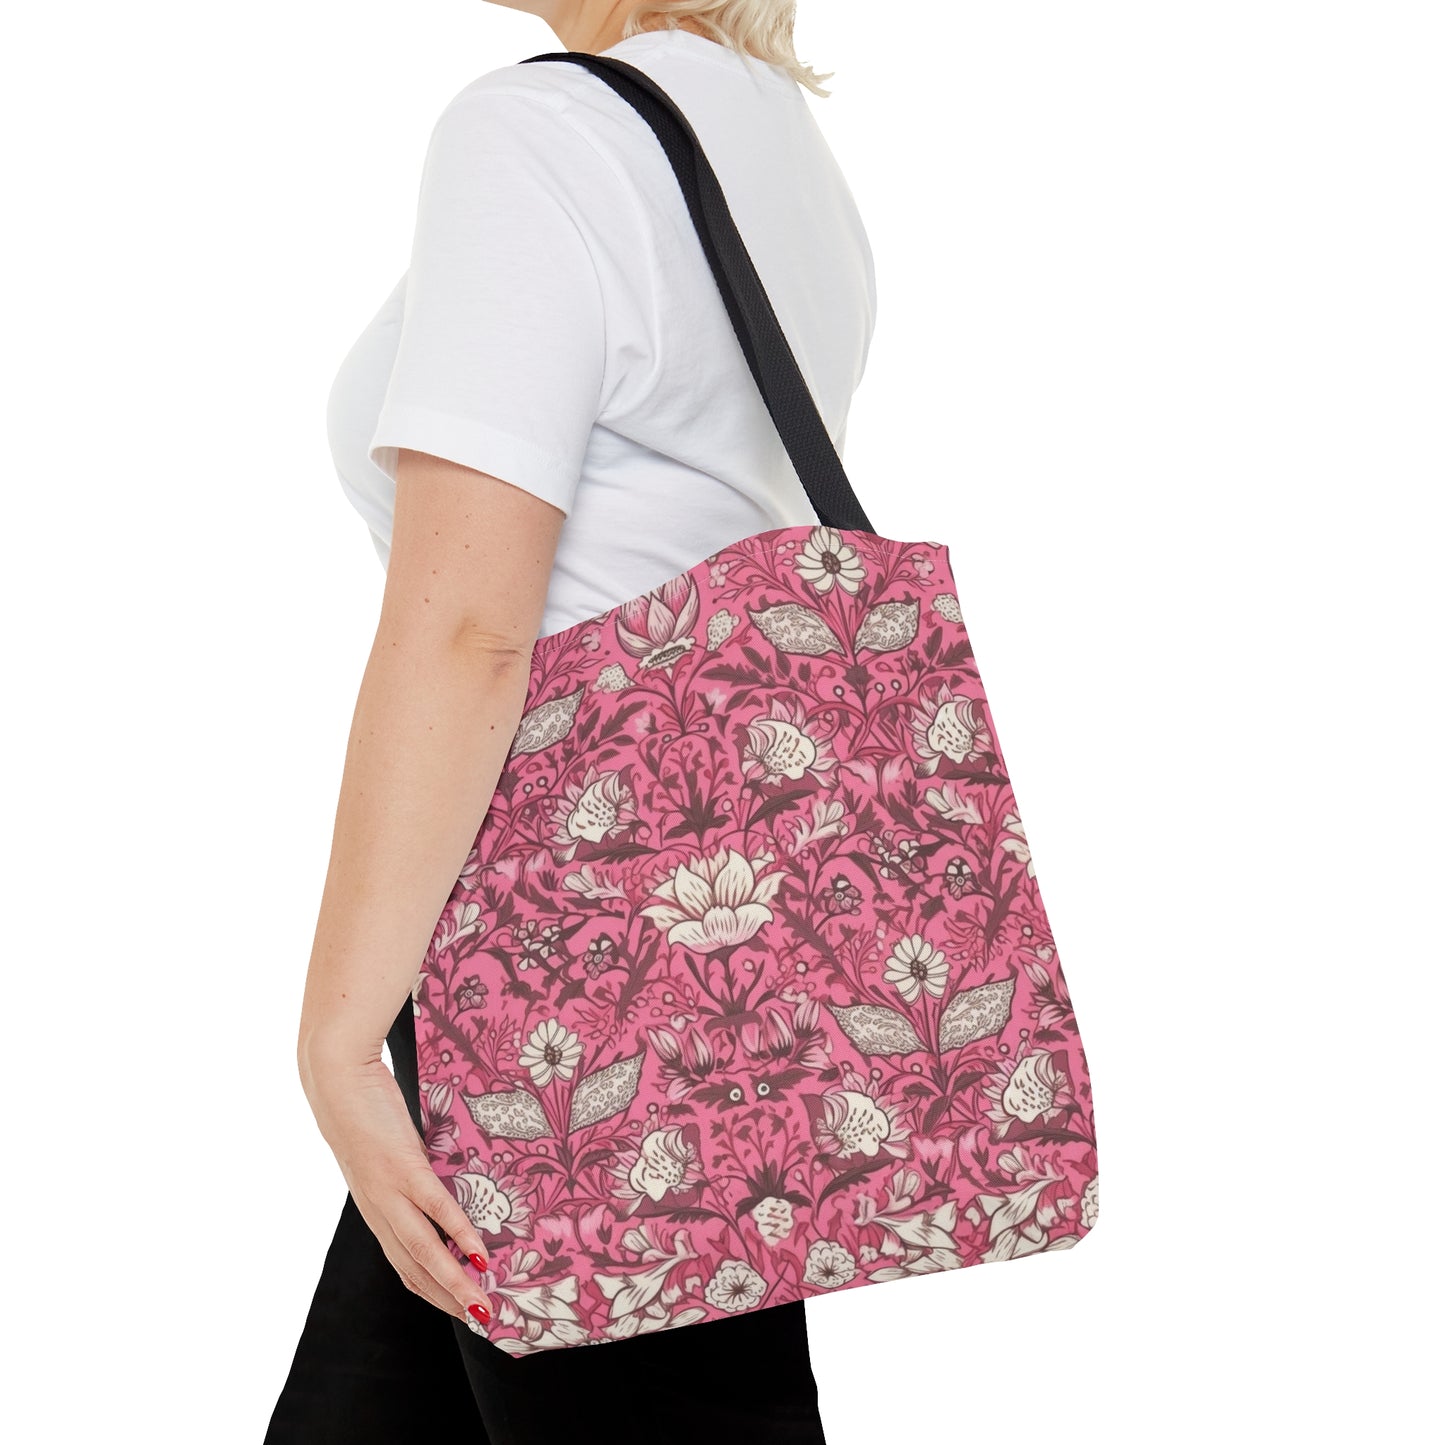 Floral Tote Bag Jacobean Design